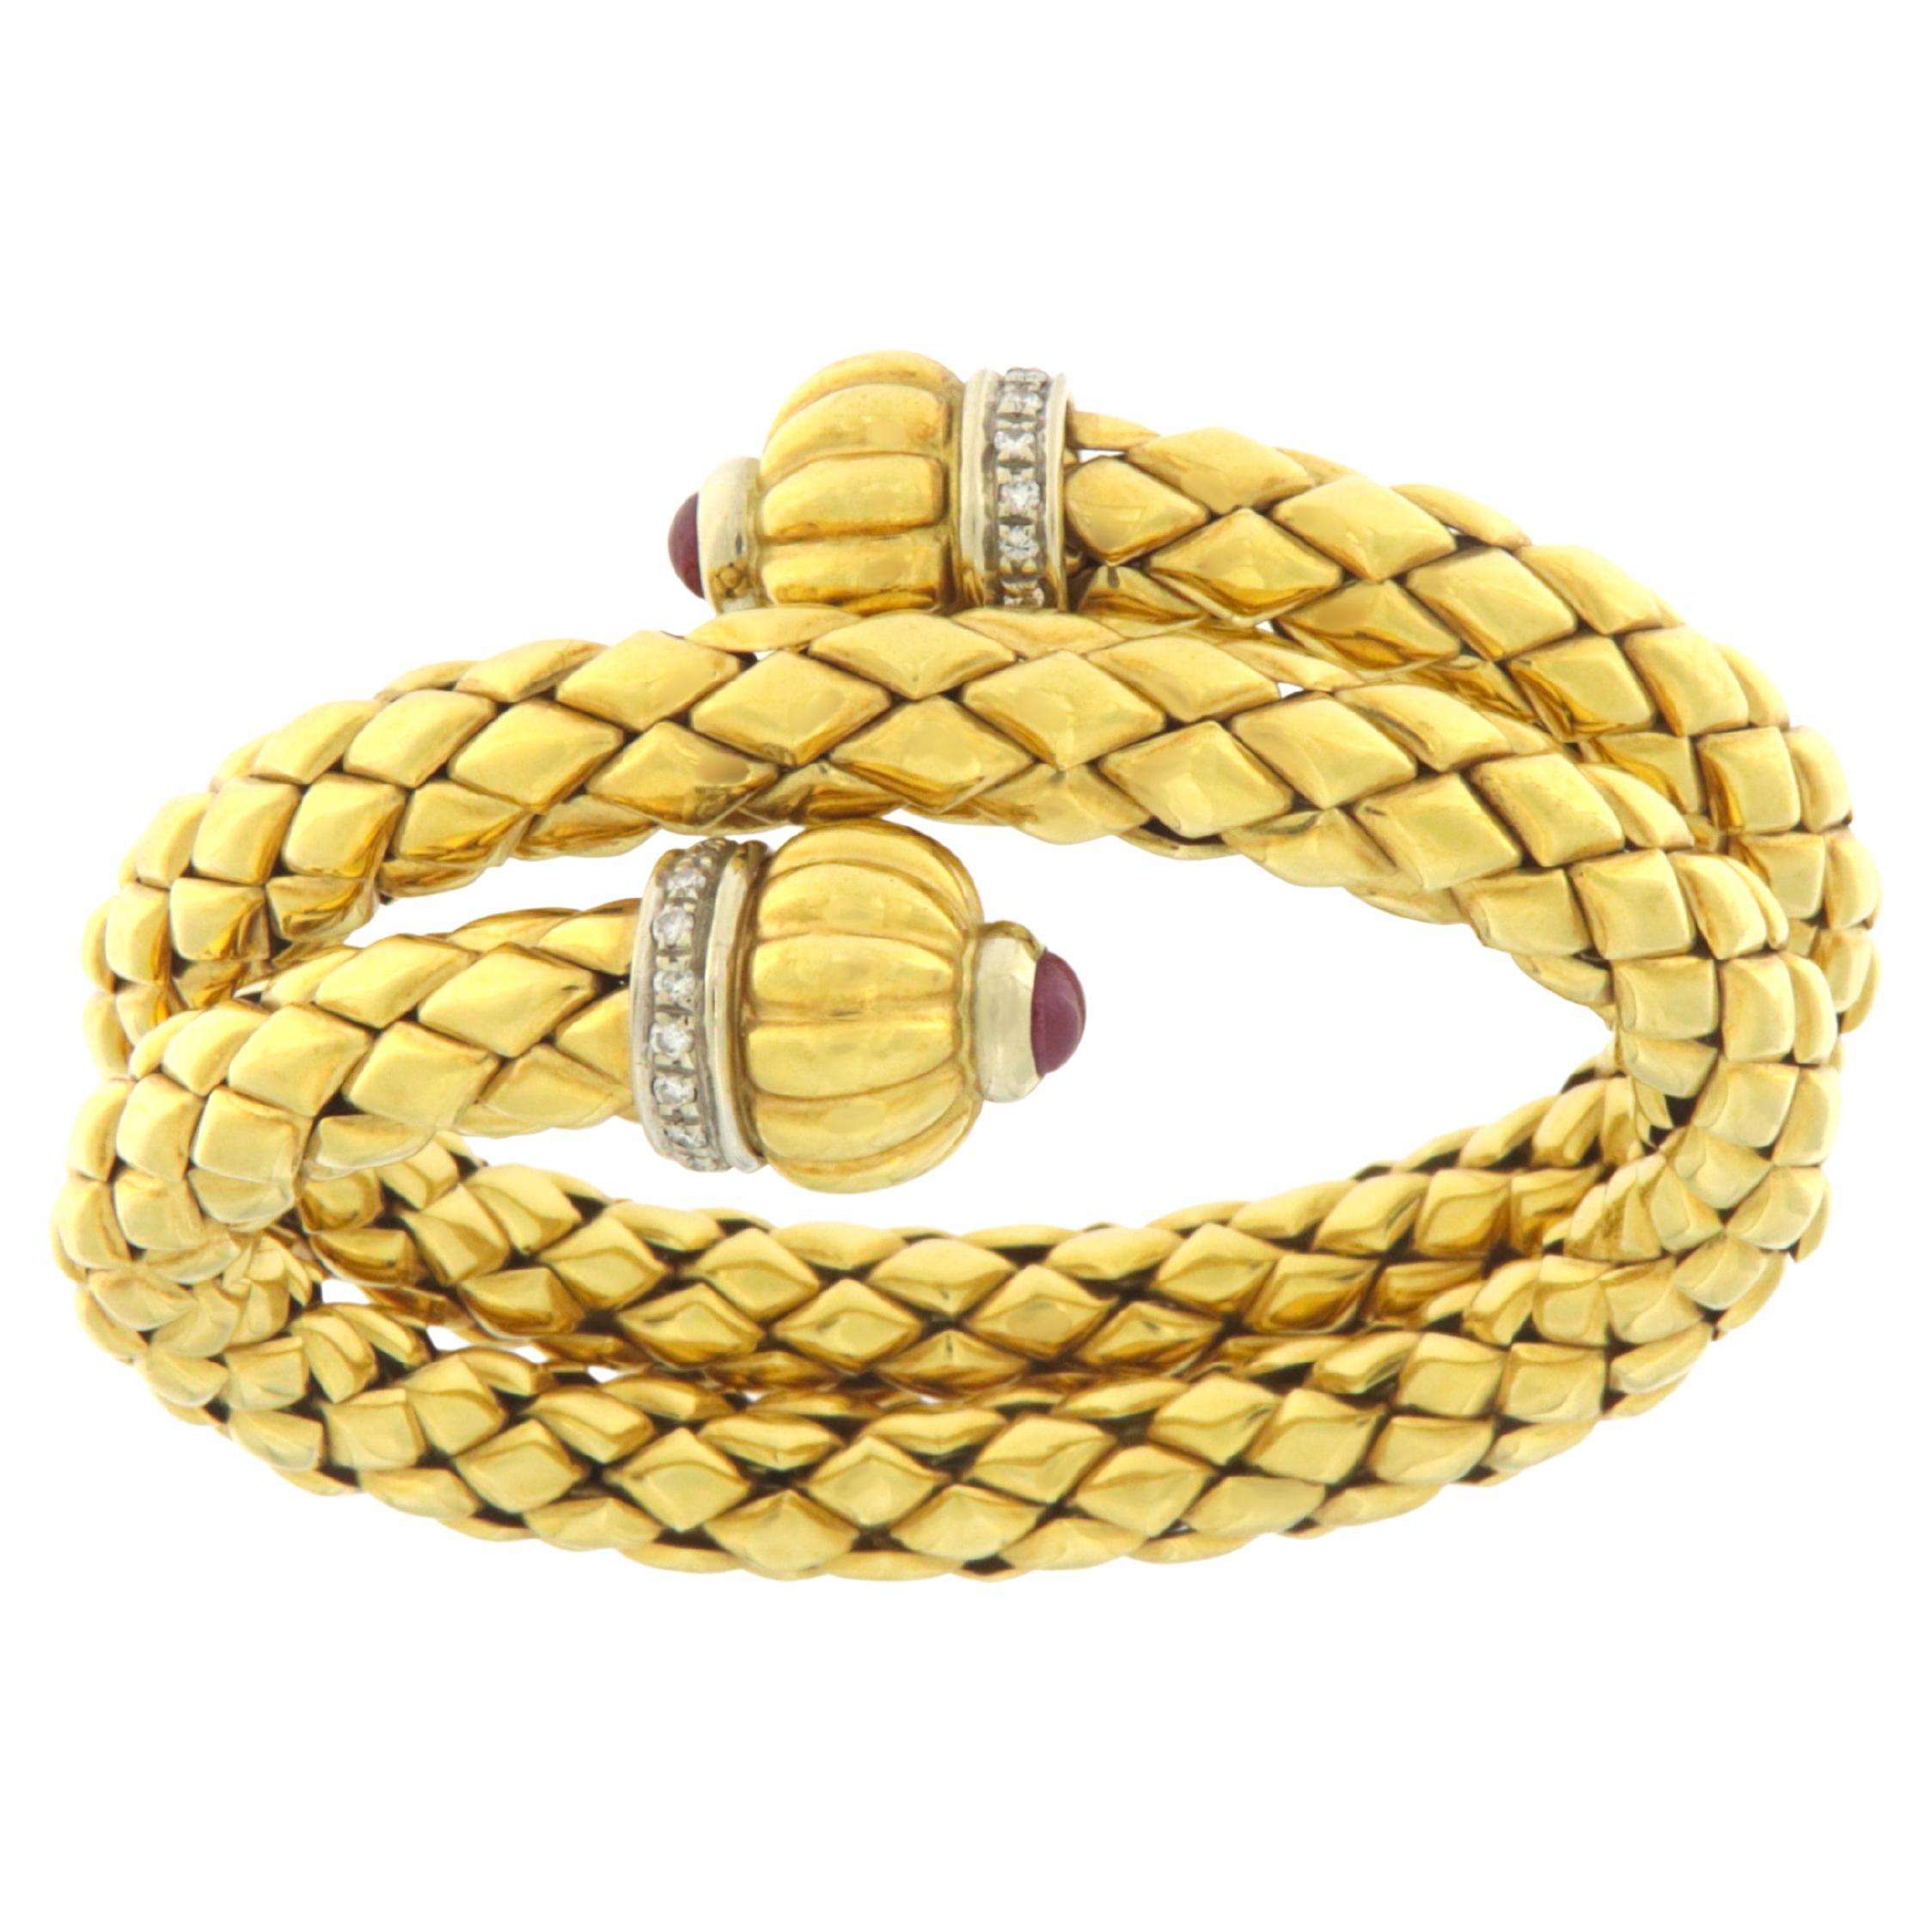 Chimento Italy 18 Karat Yellow and White Gold Diamonds Bangle Bracelet